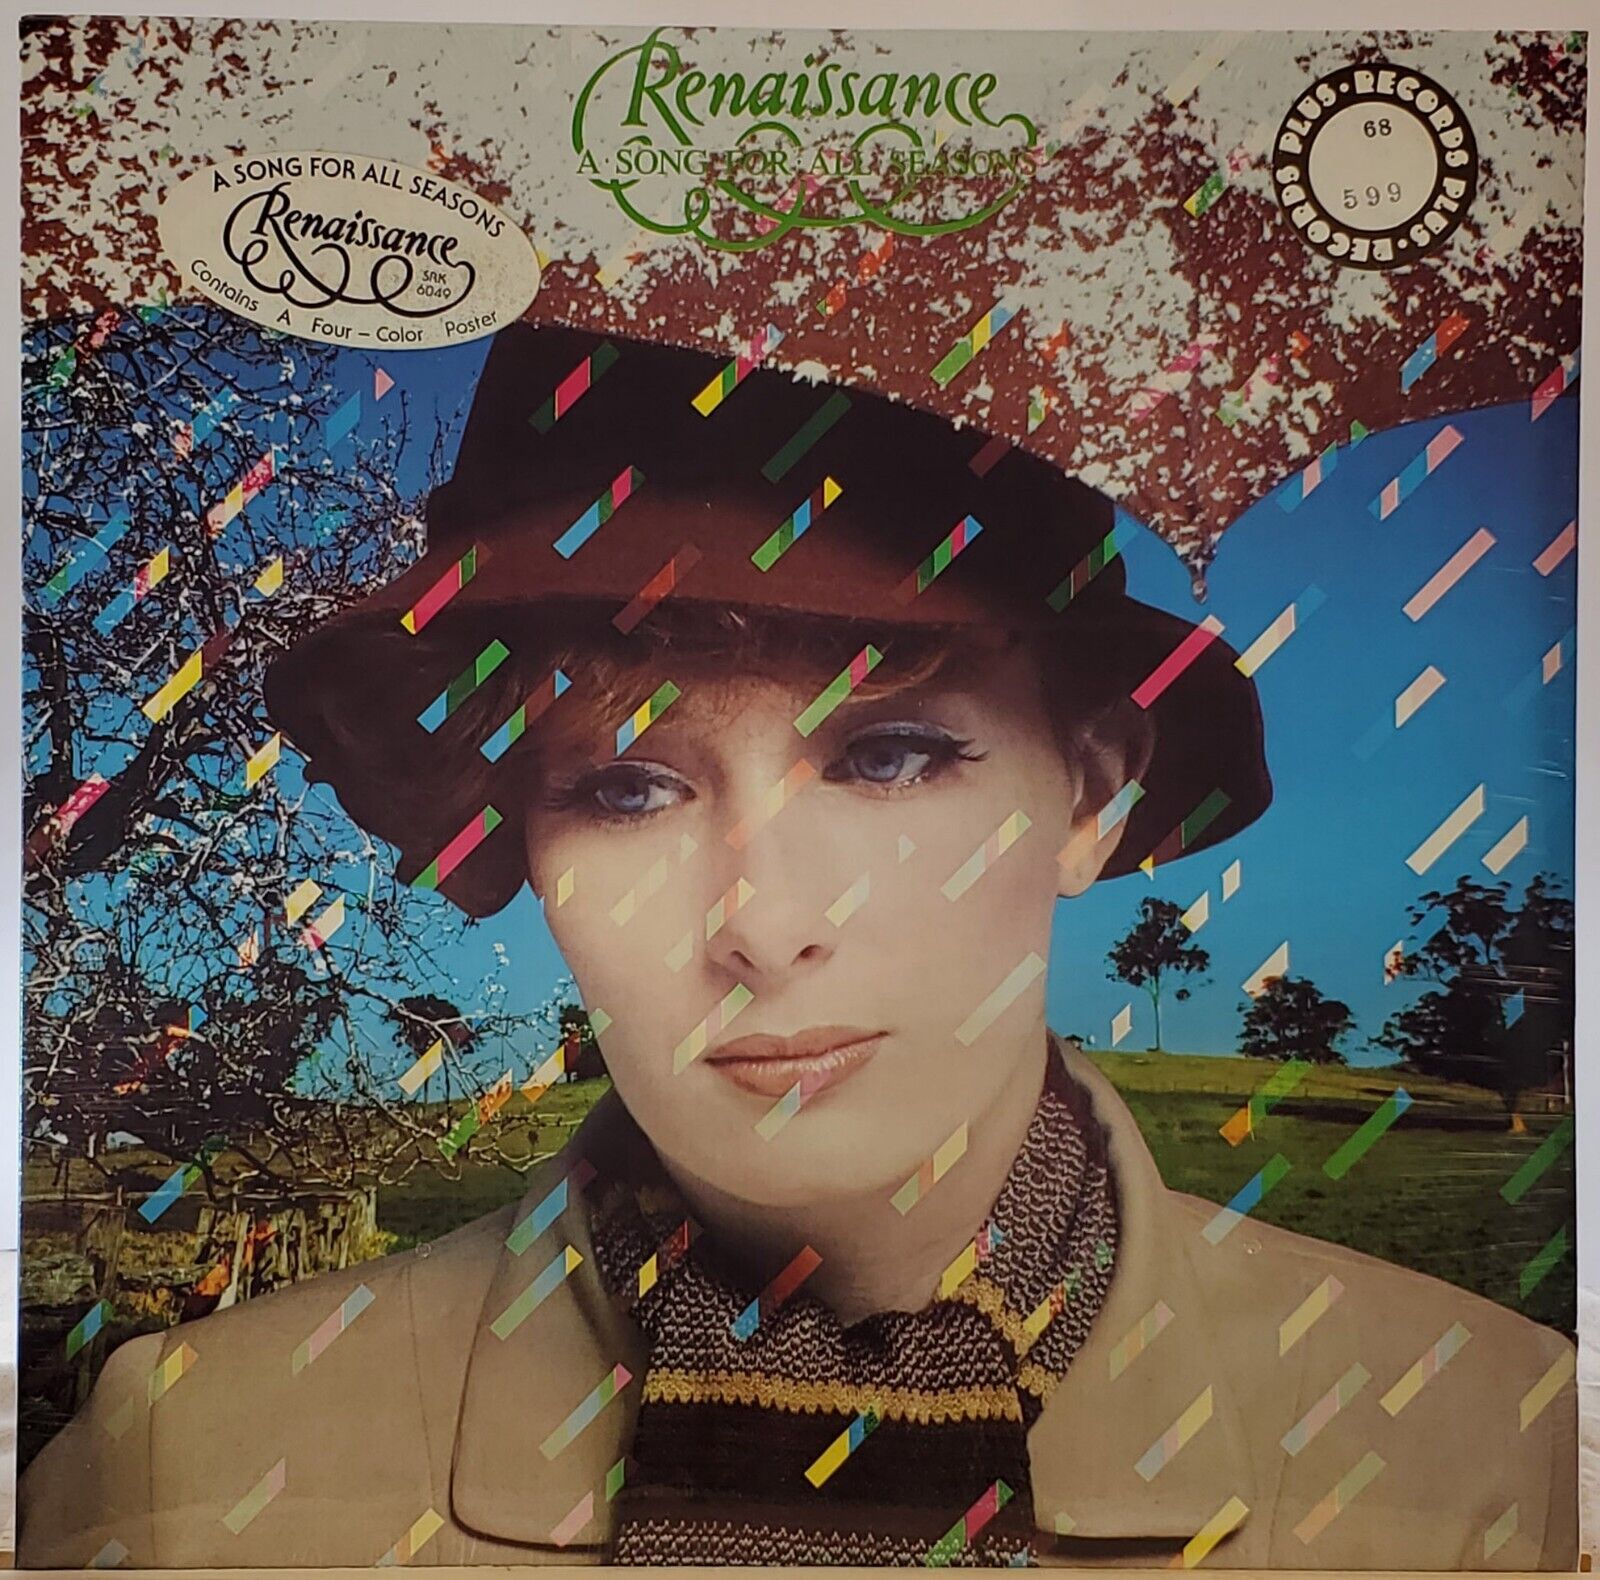 Renaissance-A Song For All Seasons, LP, 1978, Sire SRK 6049 (MINT) Hype Sticker